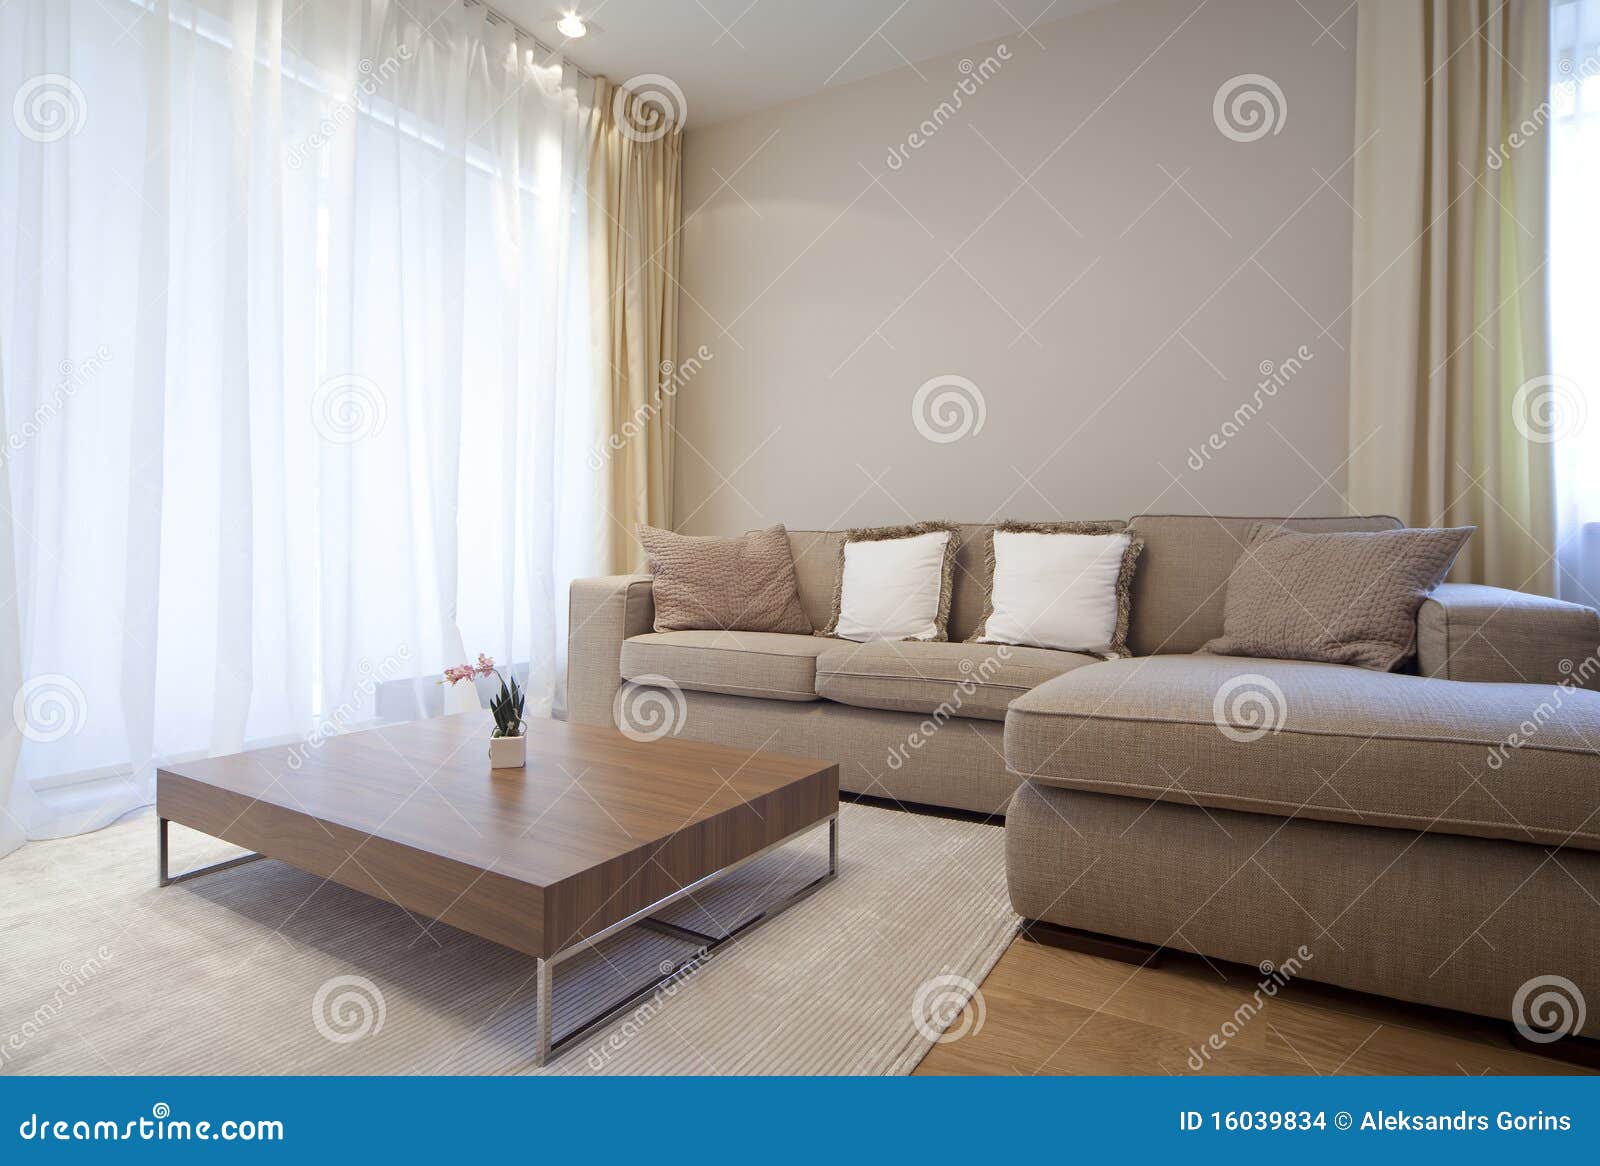 Designer living room stock photo. Image of style, room - 16039834